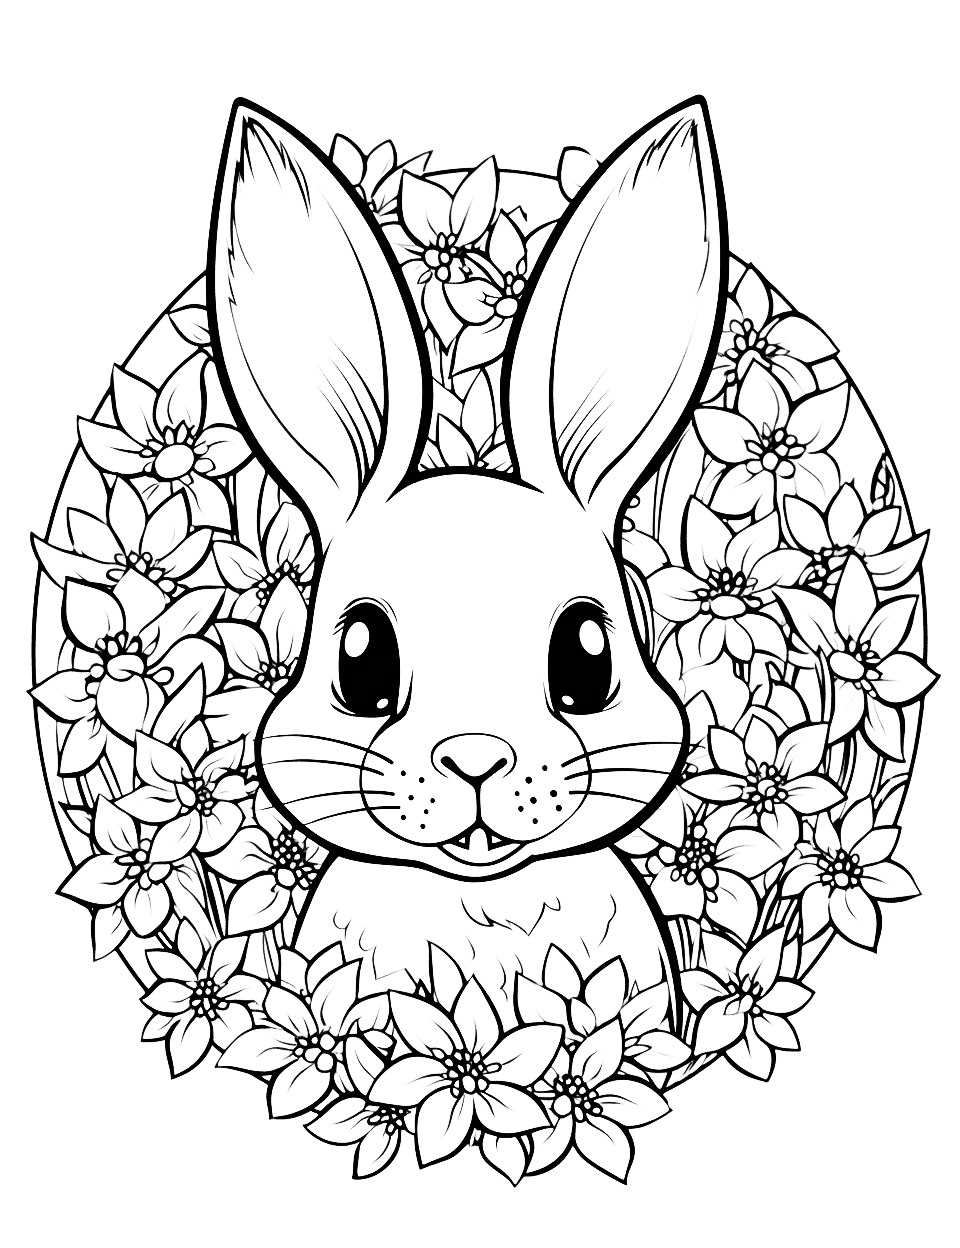 Bunny Mandala Coloring Page - A harmonious mandala design revolving around a central bunny motif.